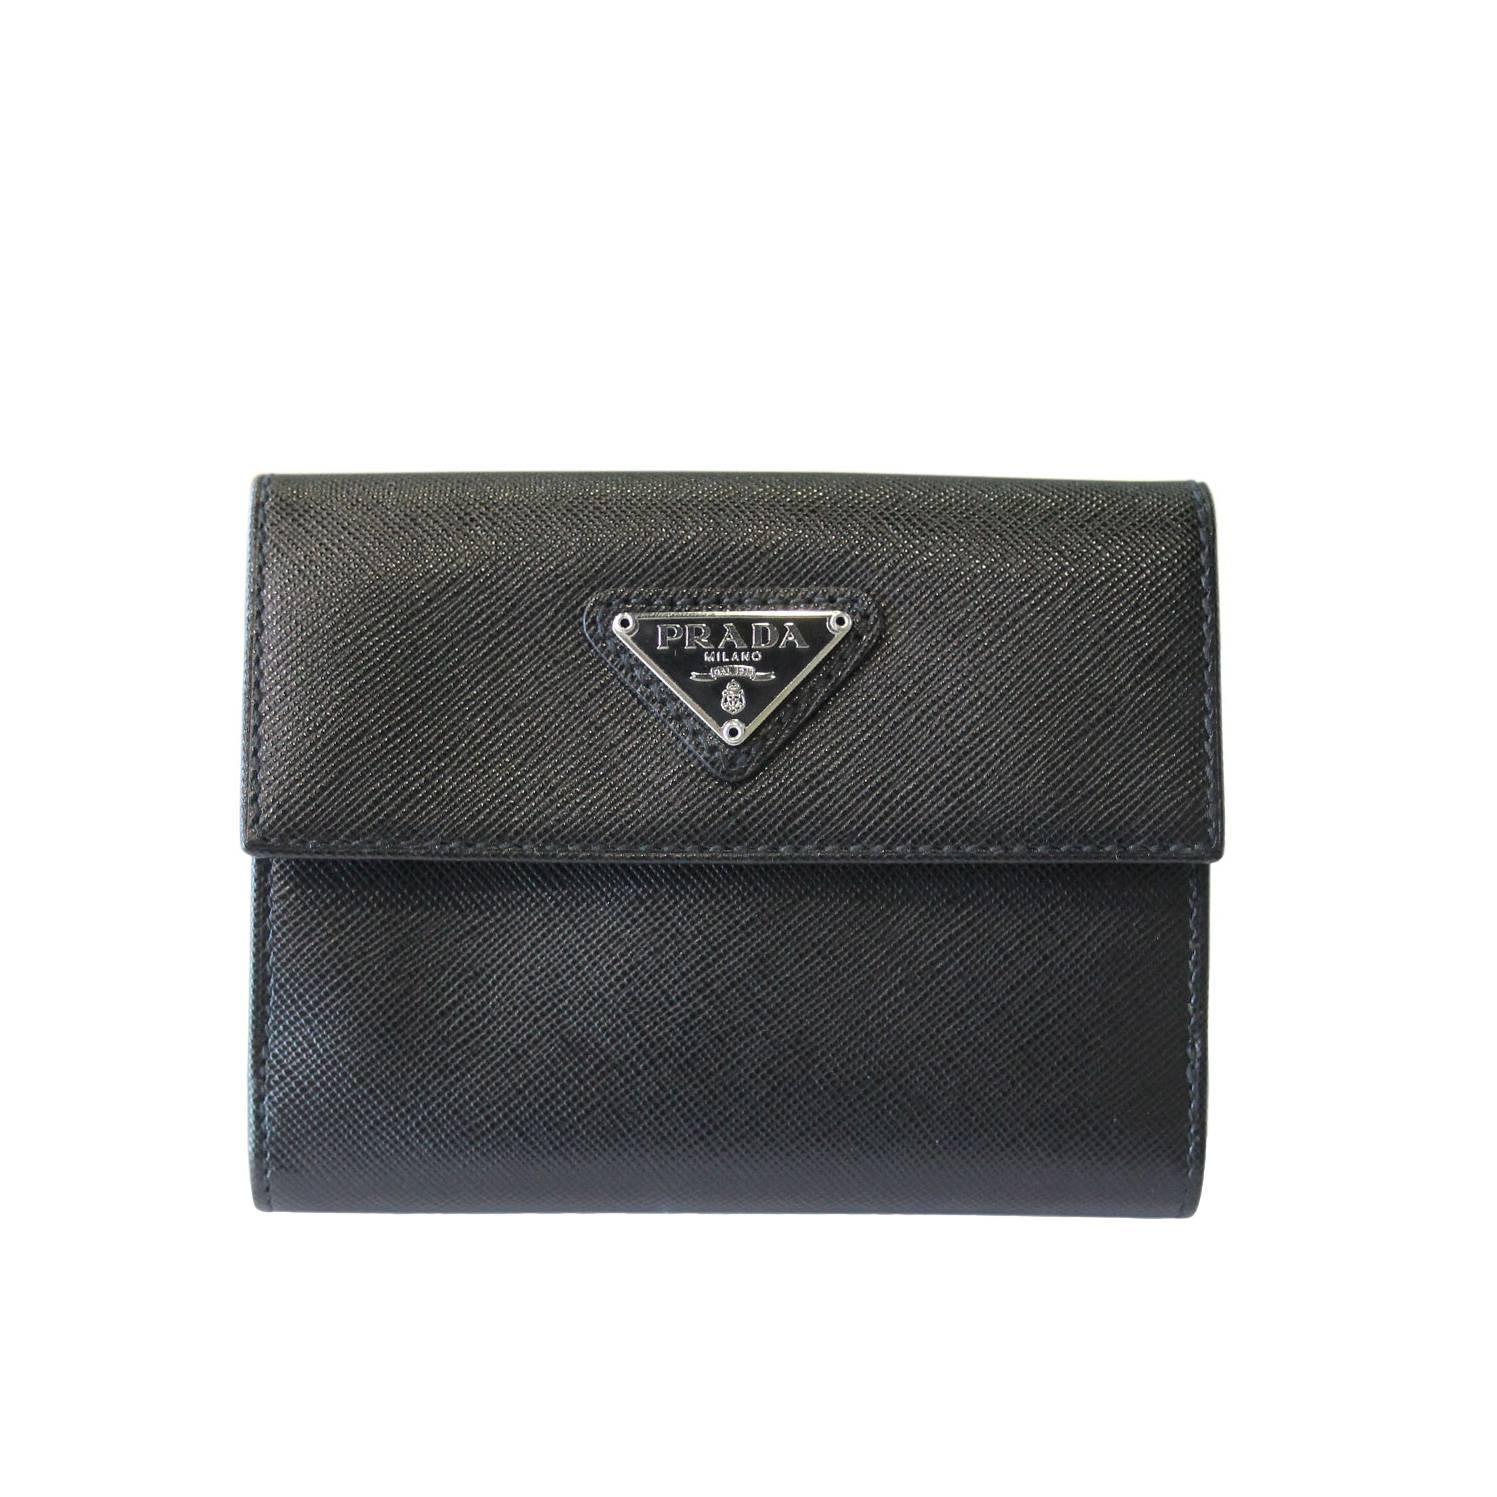 Prada Black Saffiano Leather Bi-Fold Wallet in Box at 1stdibs  